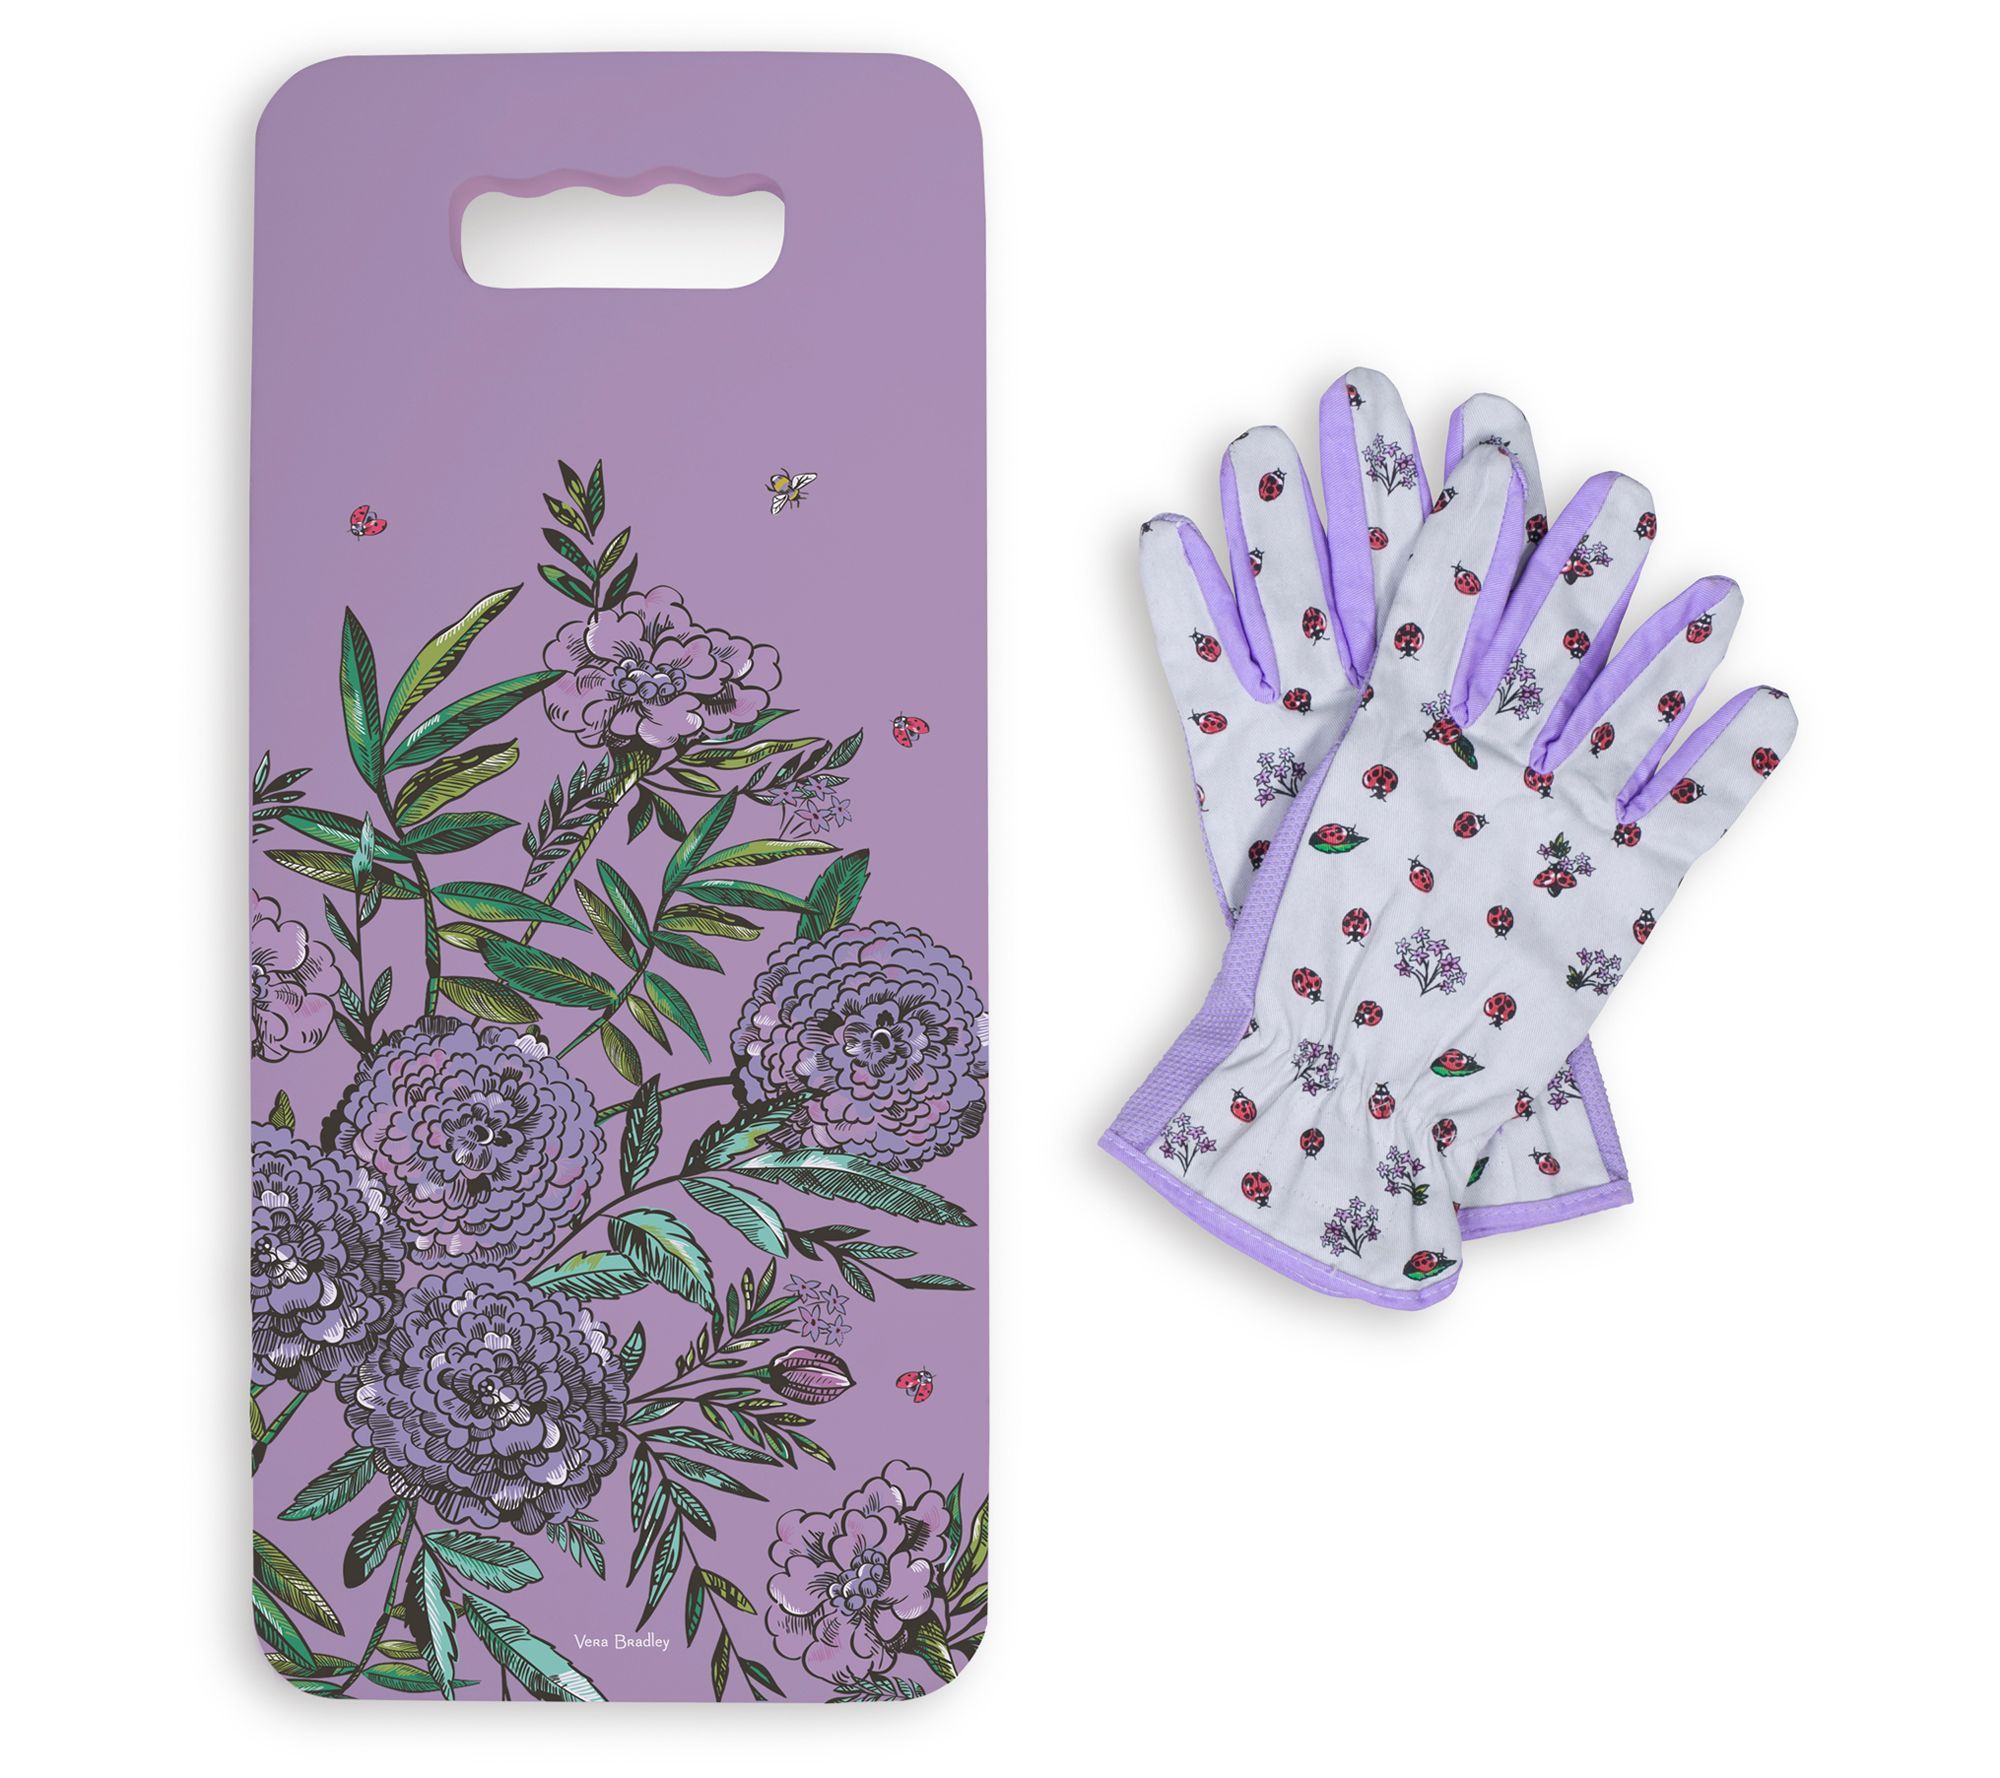 Vera Bradley Glove and Garden Cushion Set, Lavender Meadow | QVC